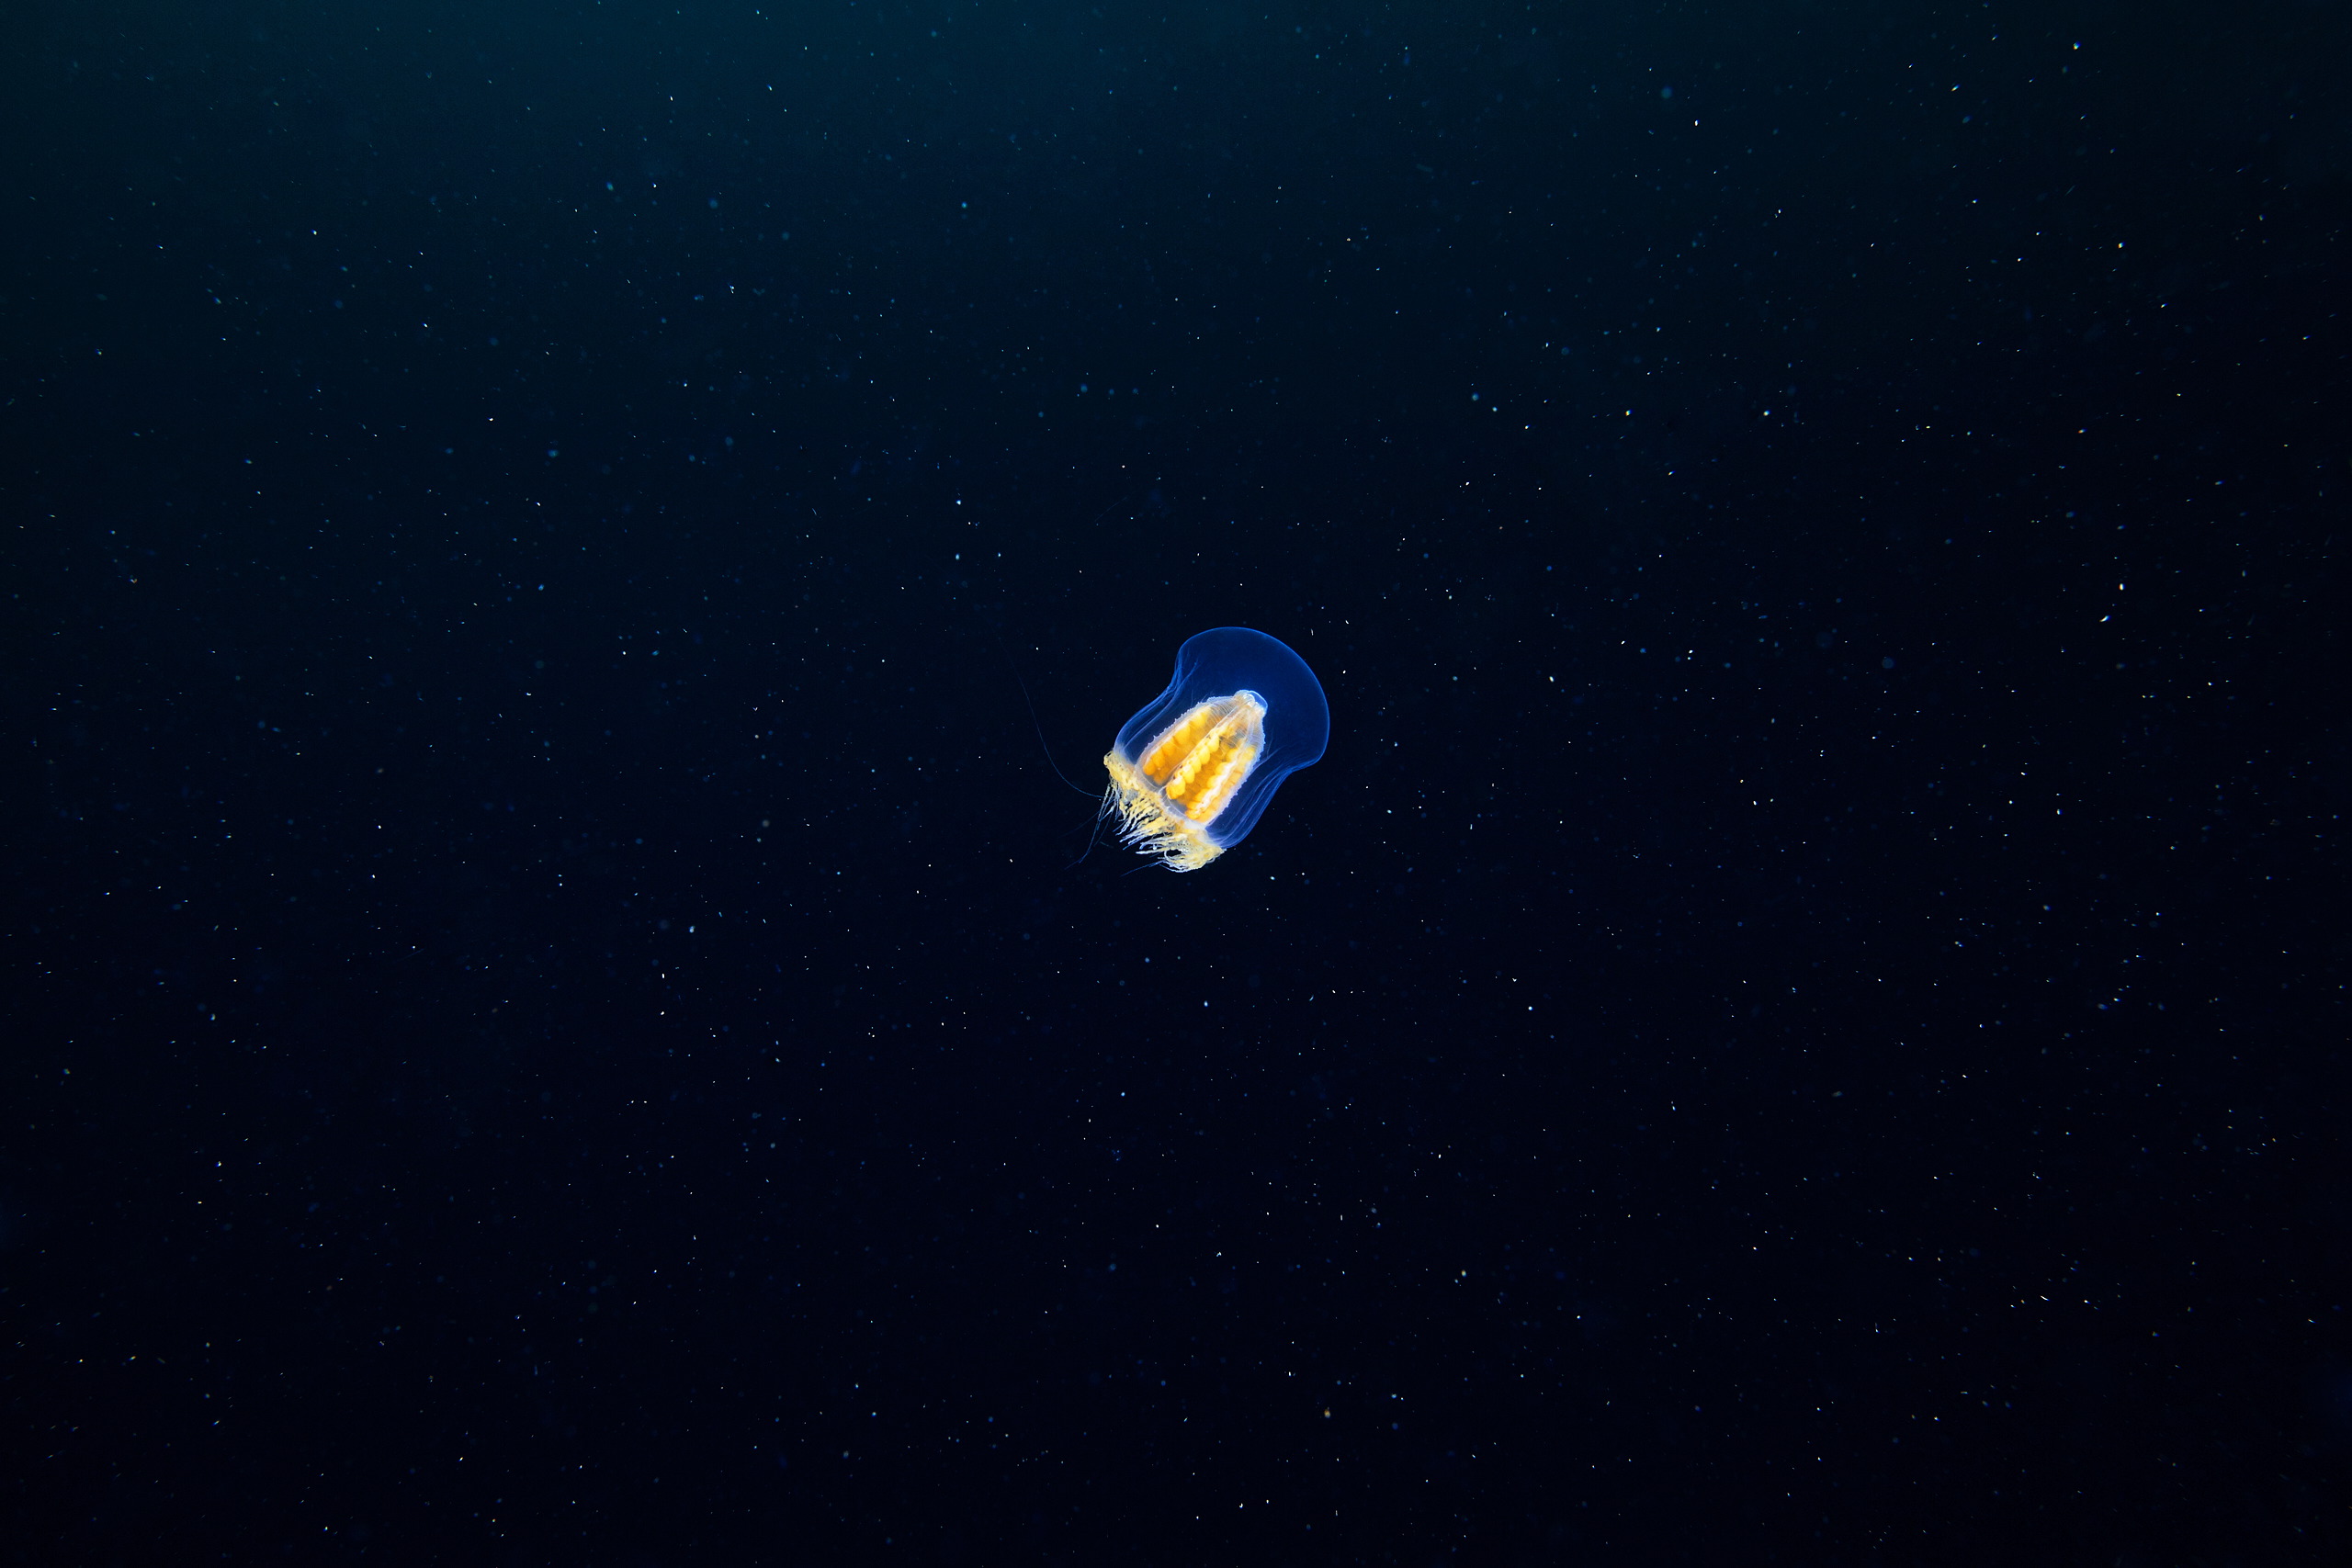 Hydrozoan jellyfish – Melicertum octocostatum